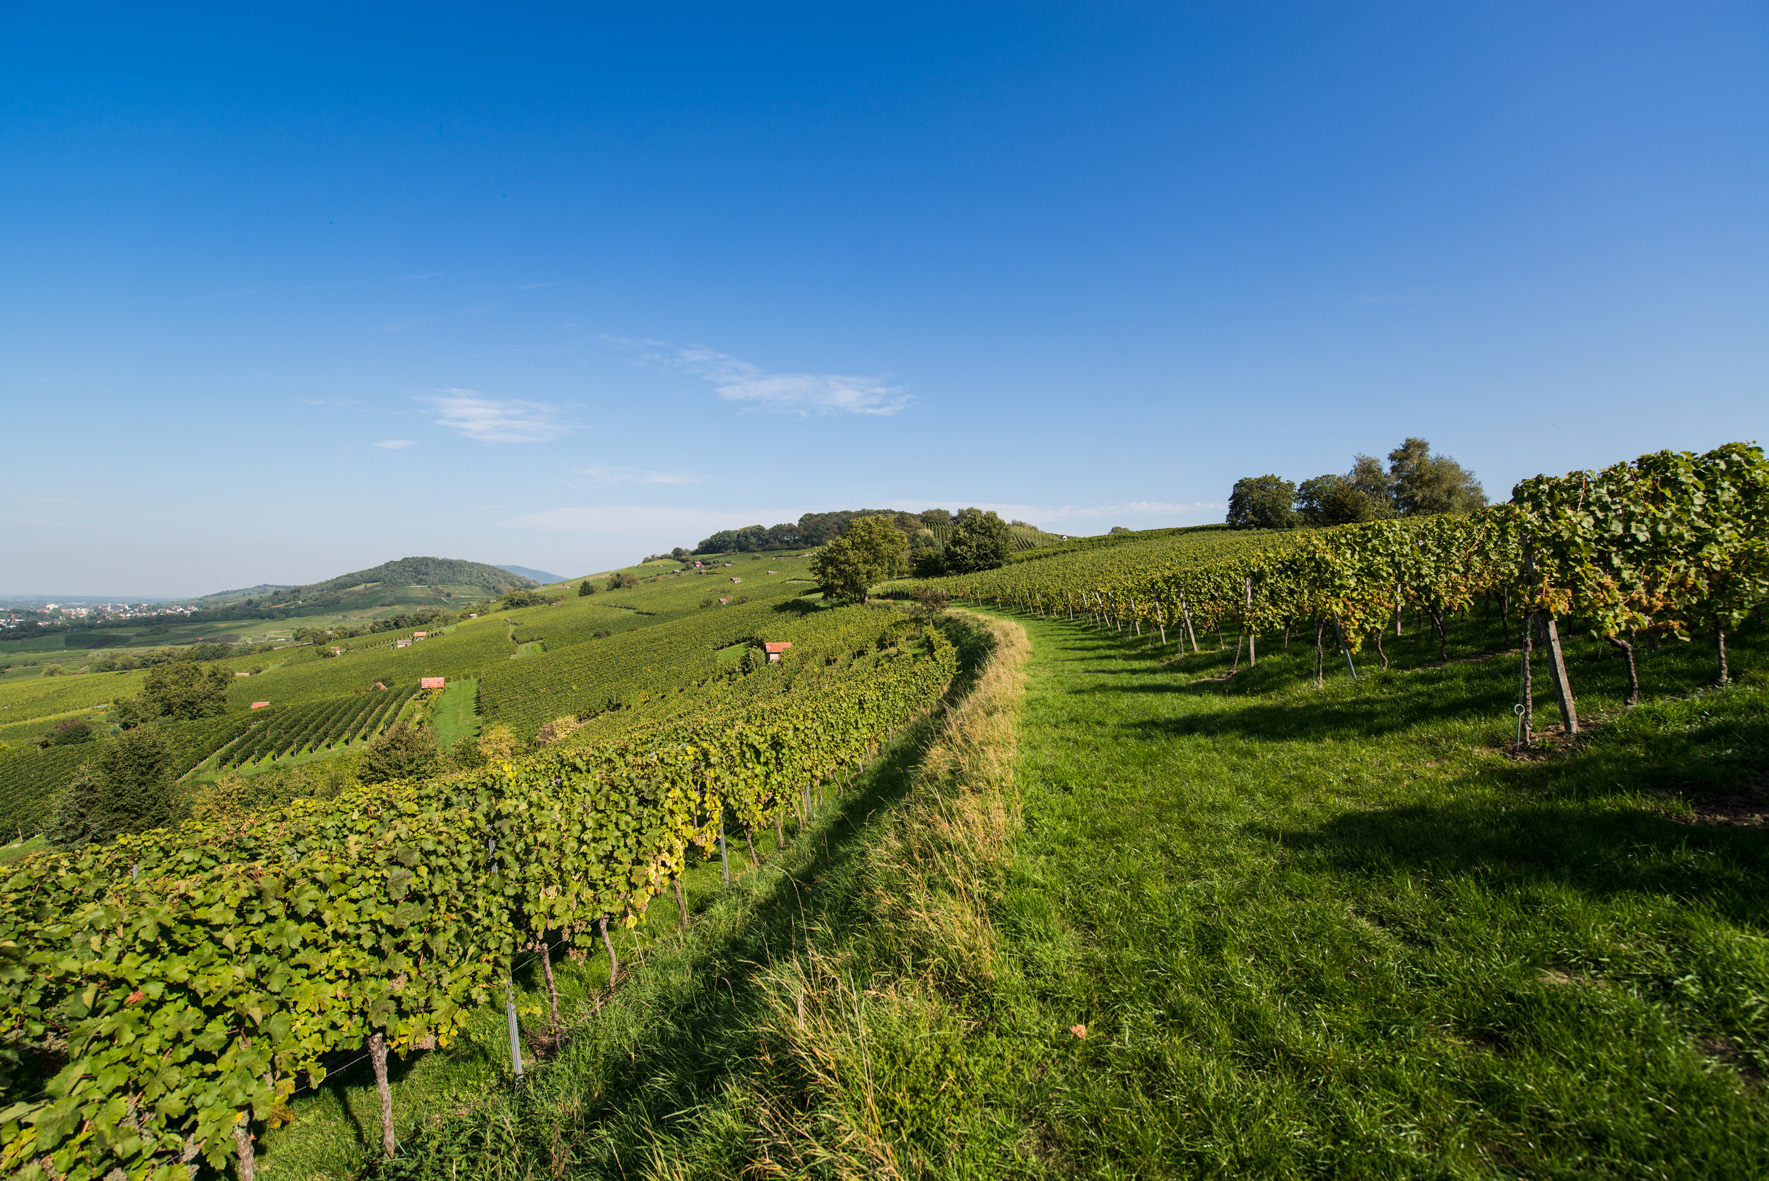 [Translate to English:] Vineyards in the Bergstraße region